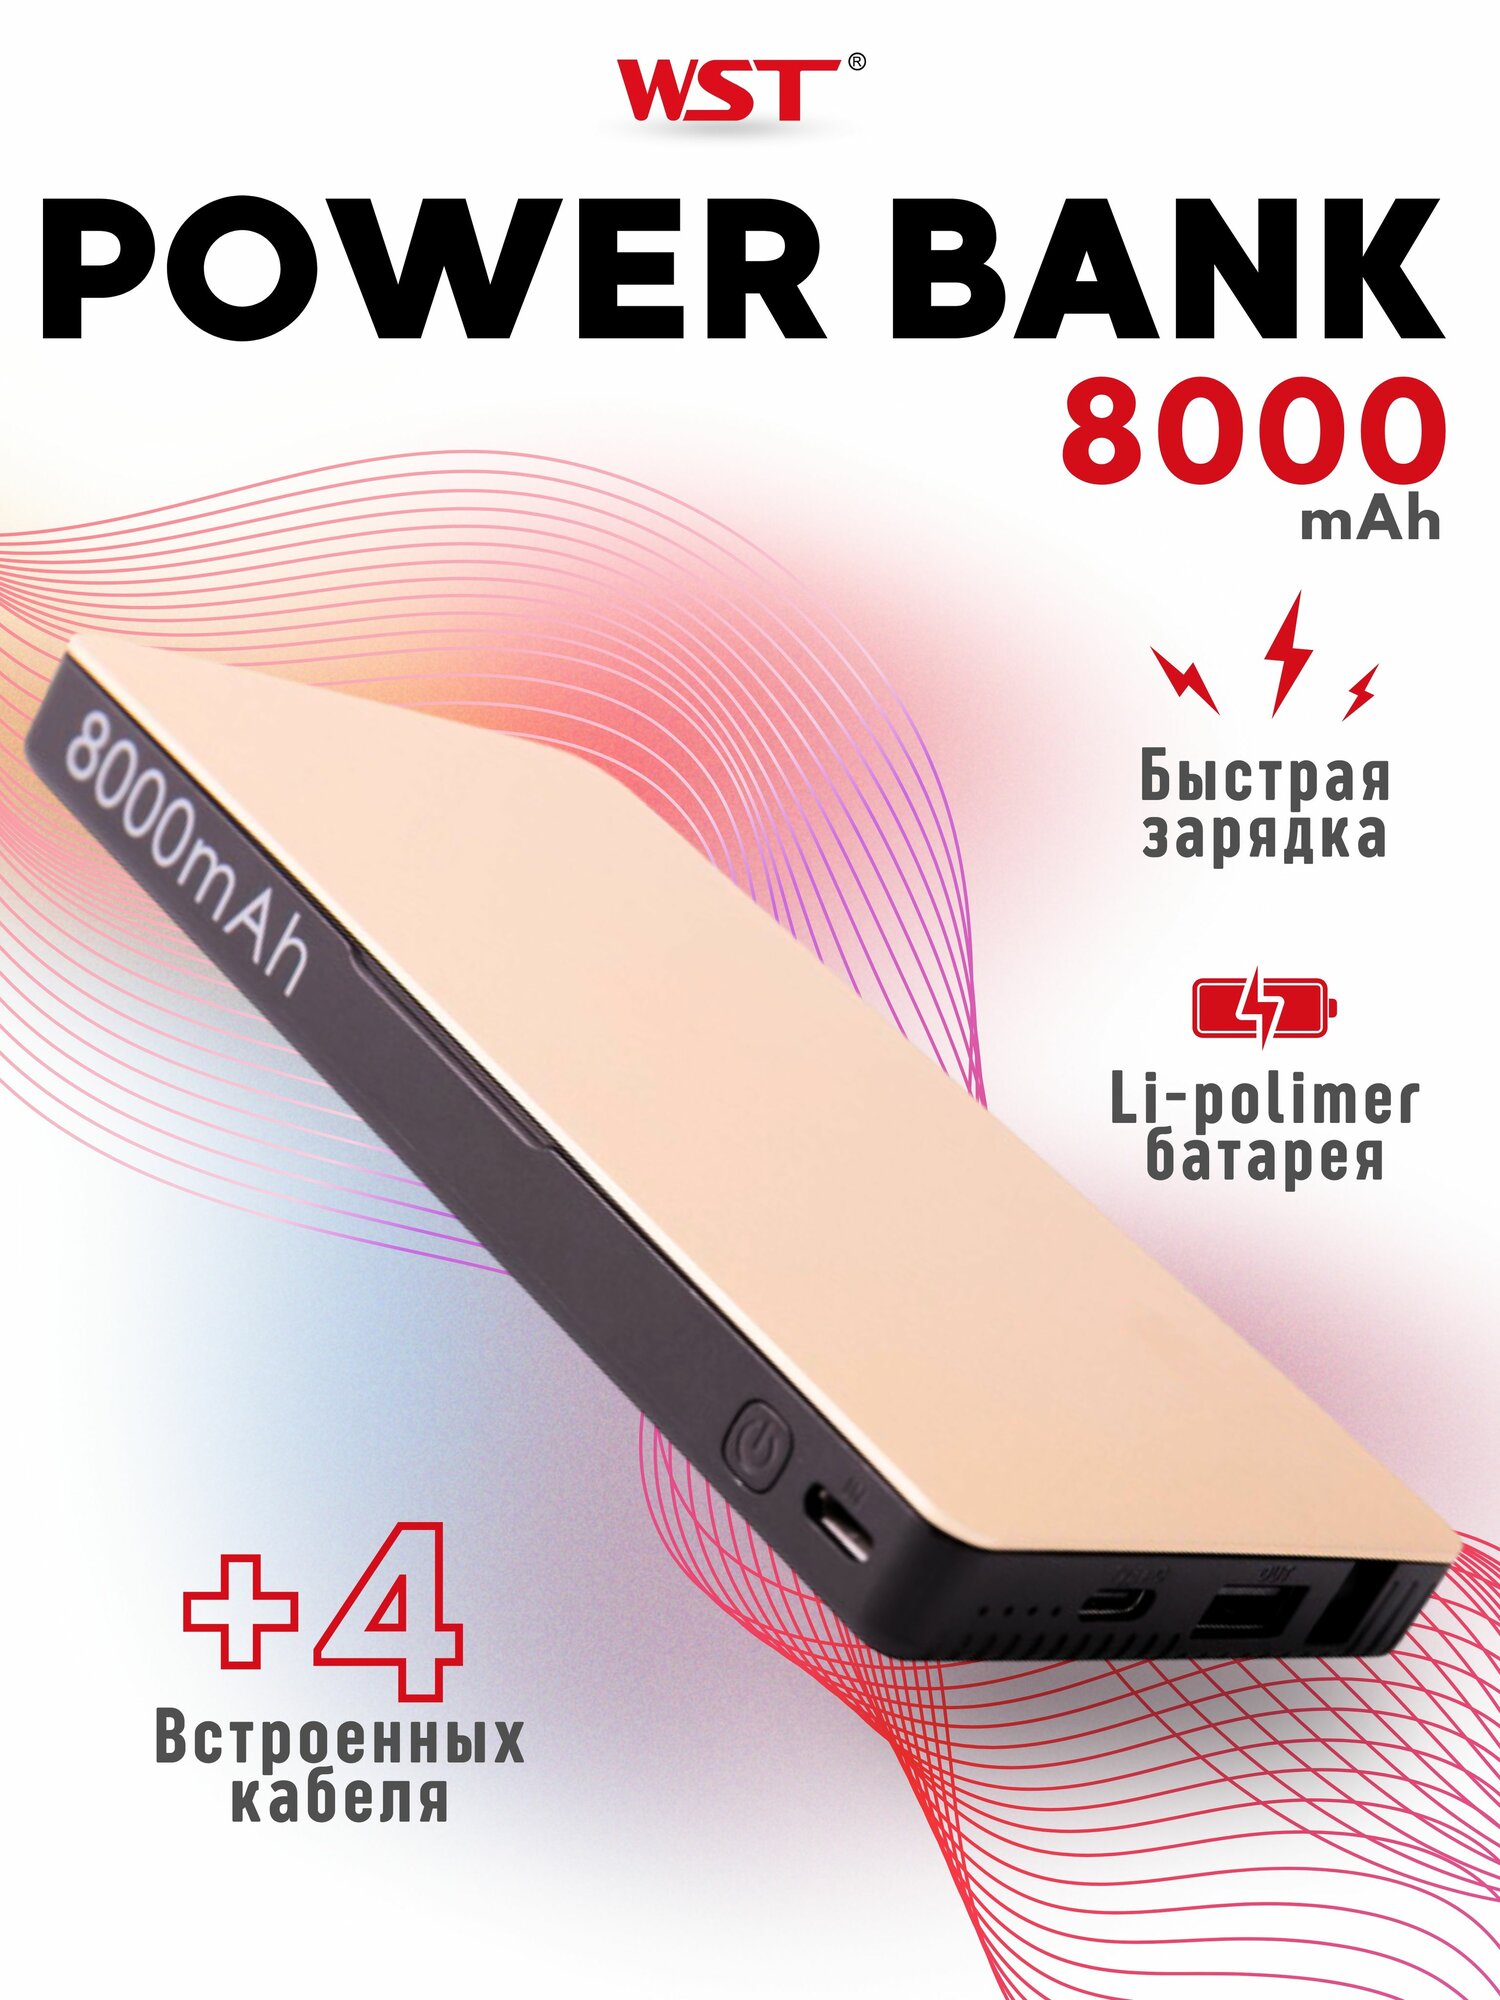 PowerBank Внешний аккумулятор WST WP932 8000 mAh (Встроенные провода type-c, micro usb, lighting)